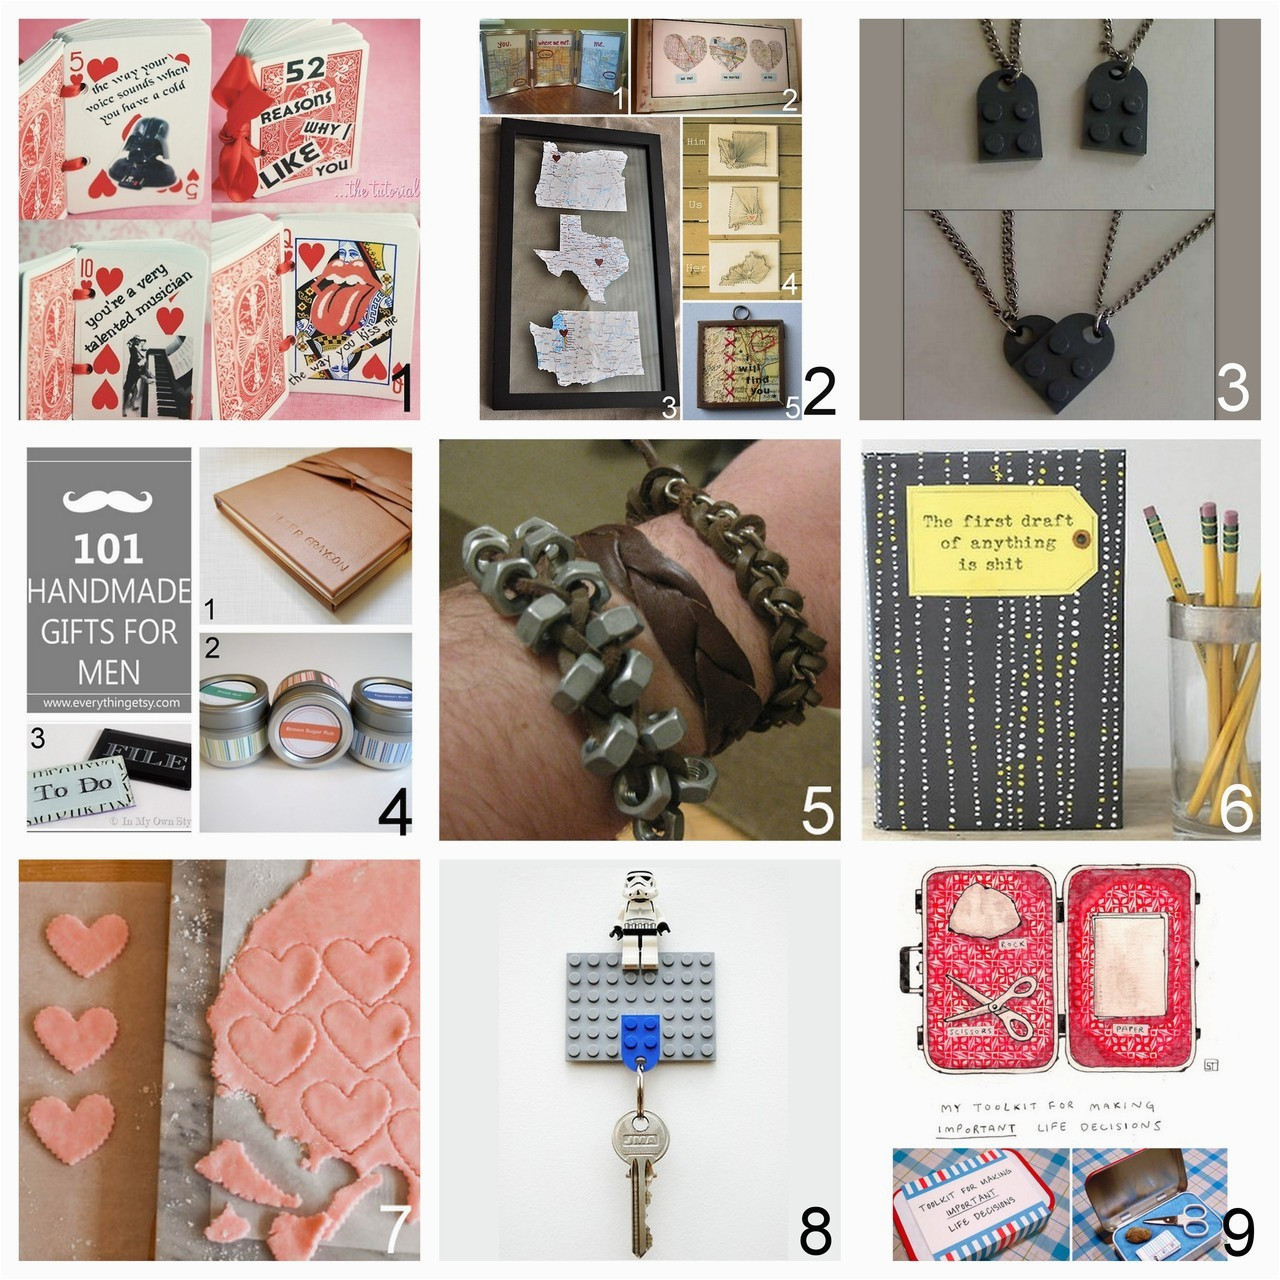 Expensive Gift Ideas For Boyfriend
 25 Best Expensive Gift Ideas for Boyfriend Home Family